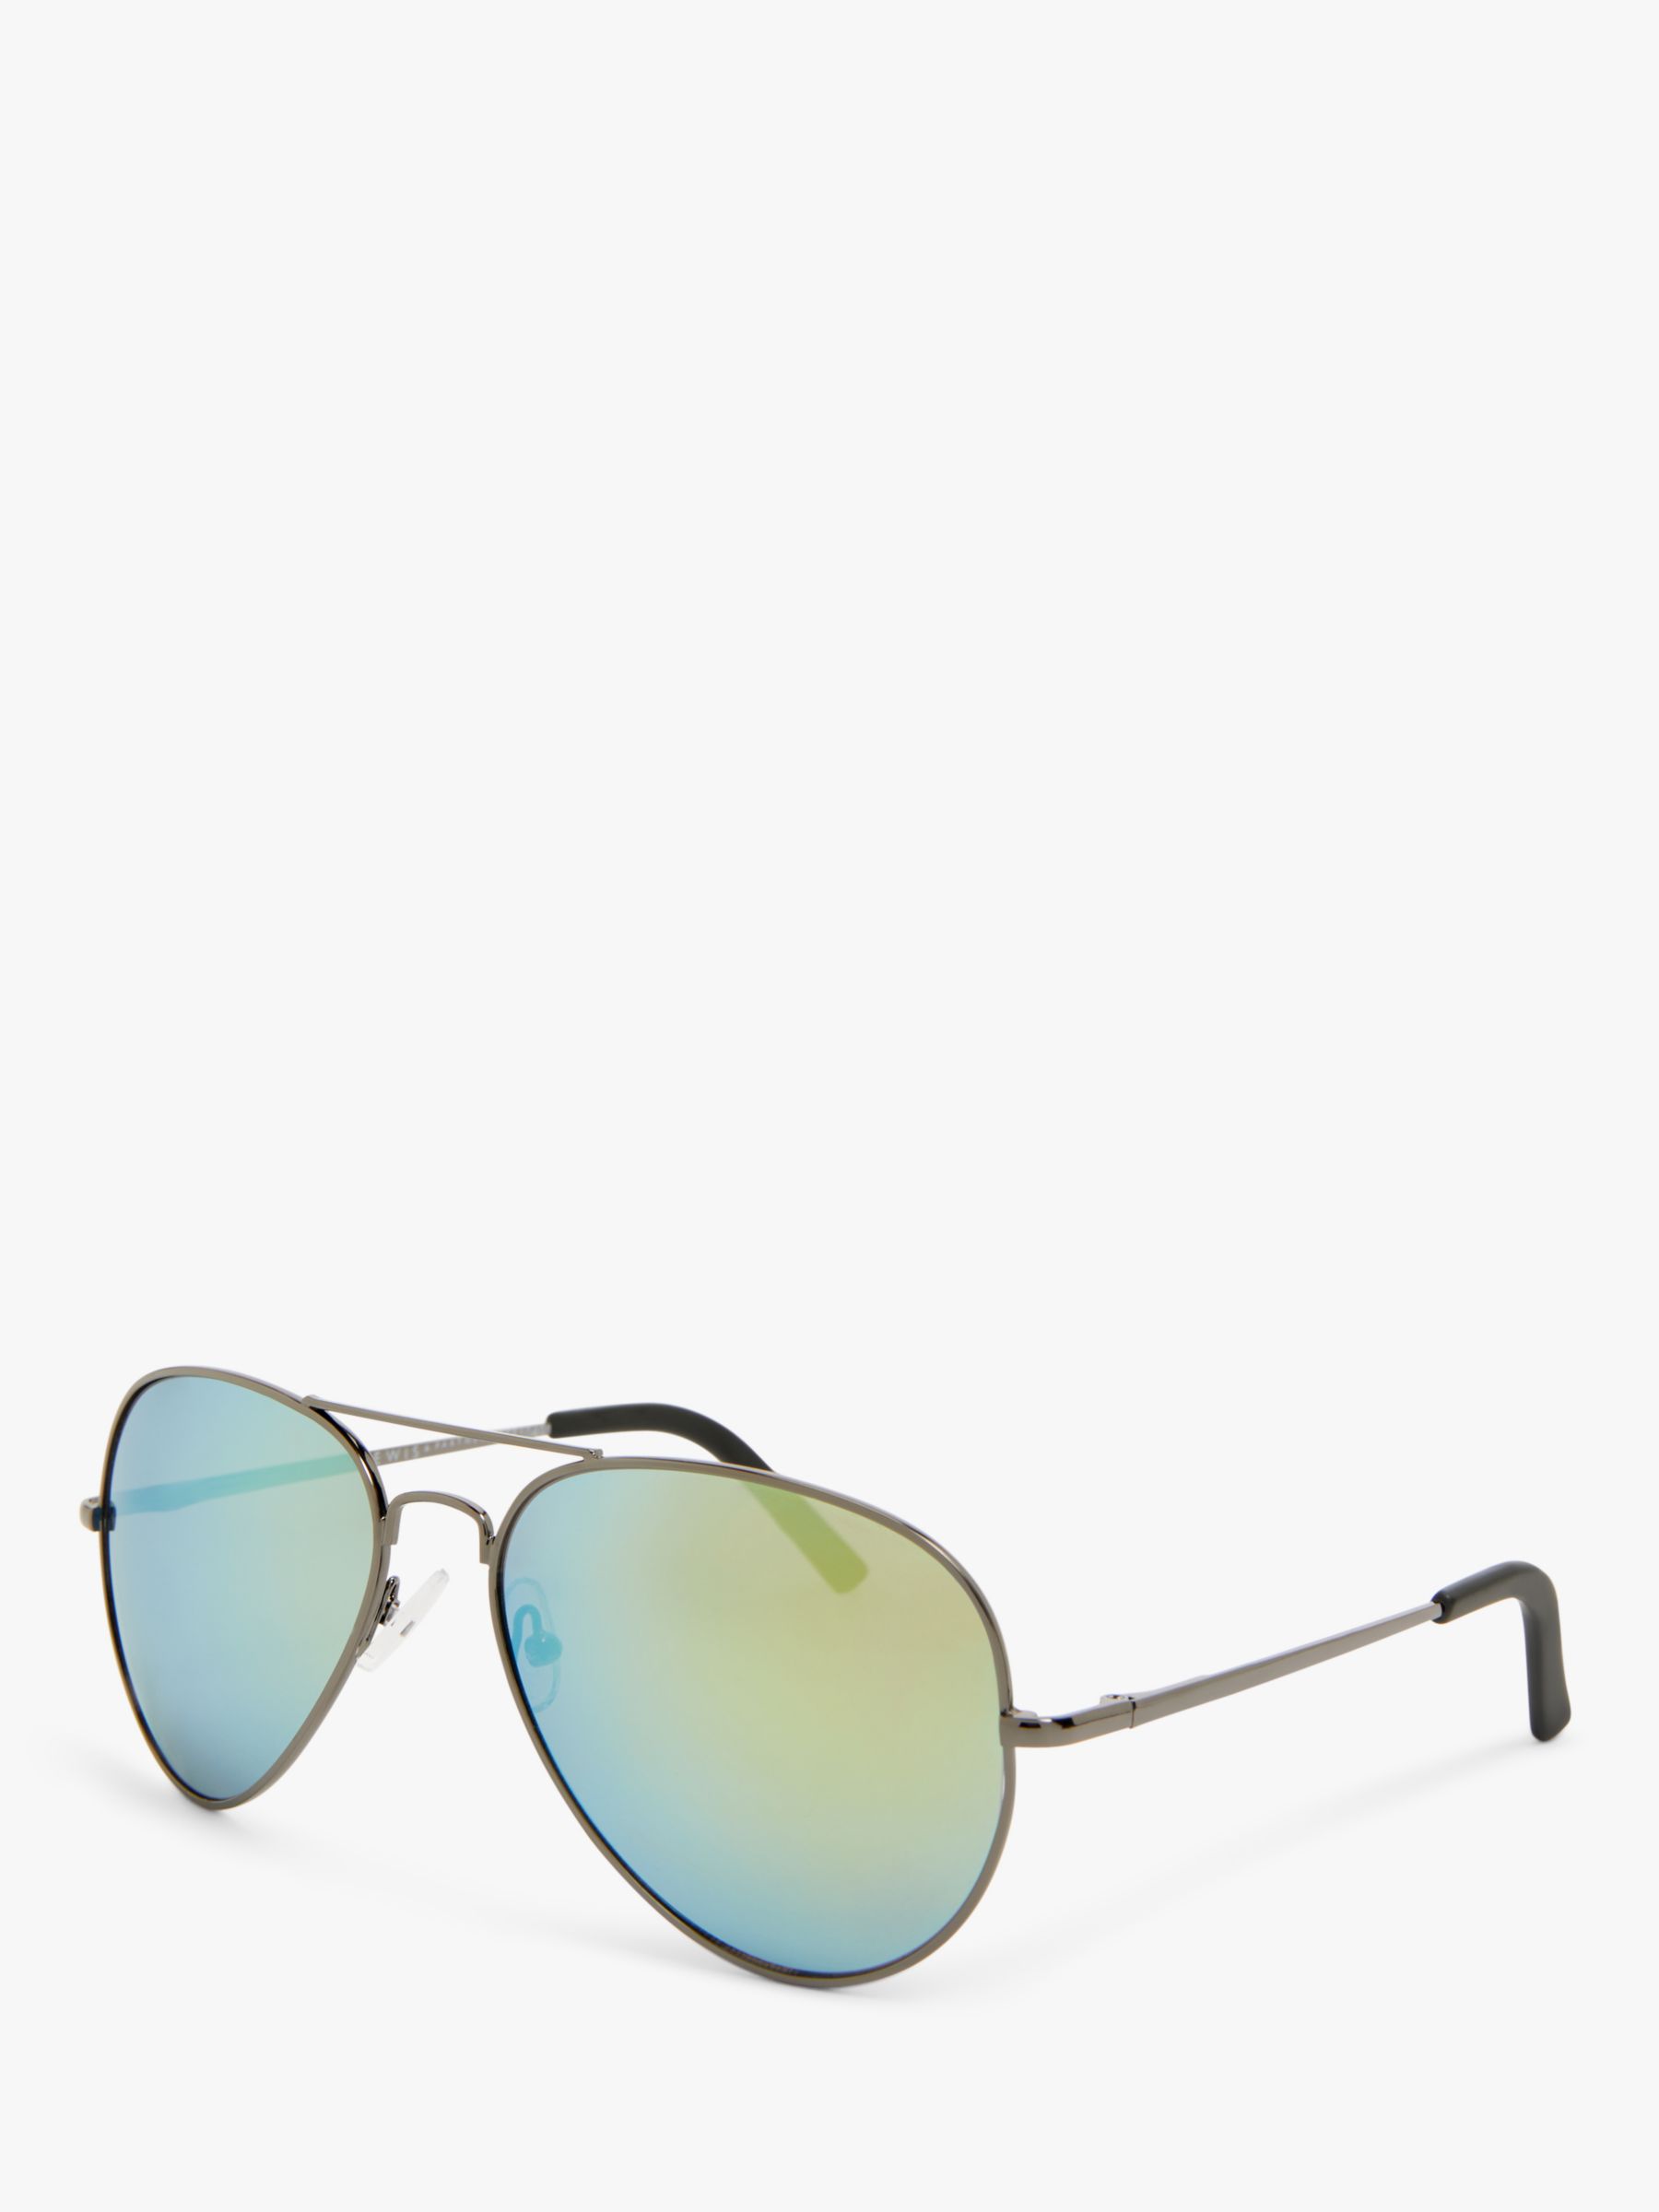 John Lewis Women's Mirrored Lens Aviator Sunglasses, Gunmetal/Green